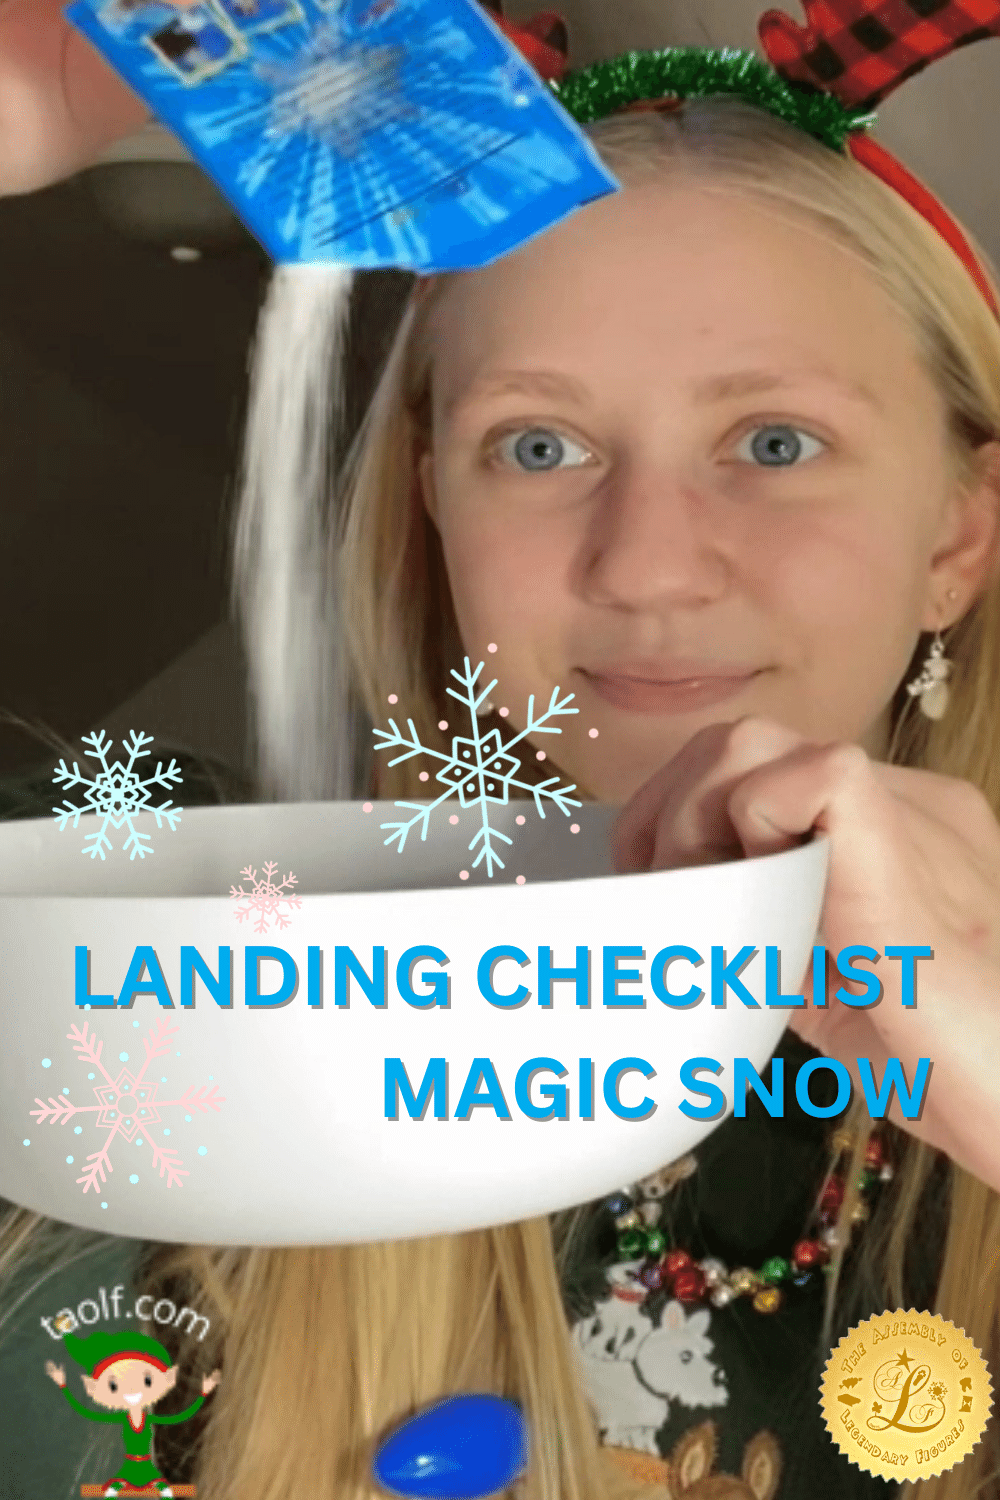 Landing Checklist and Magic Snow